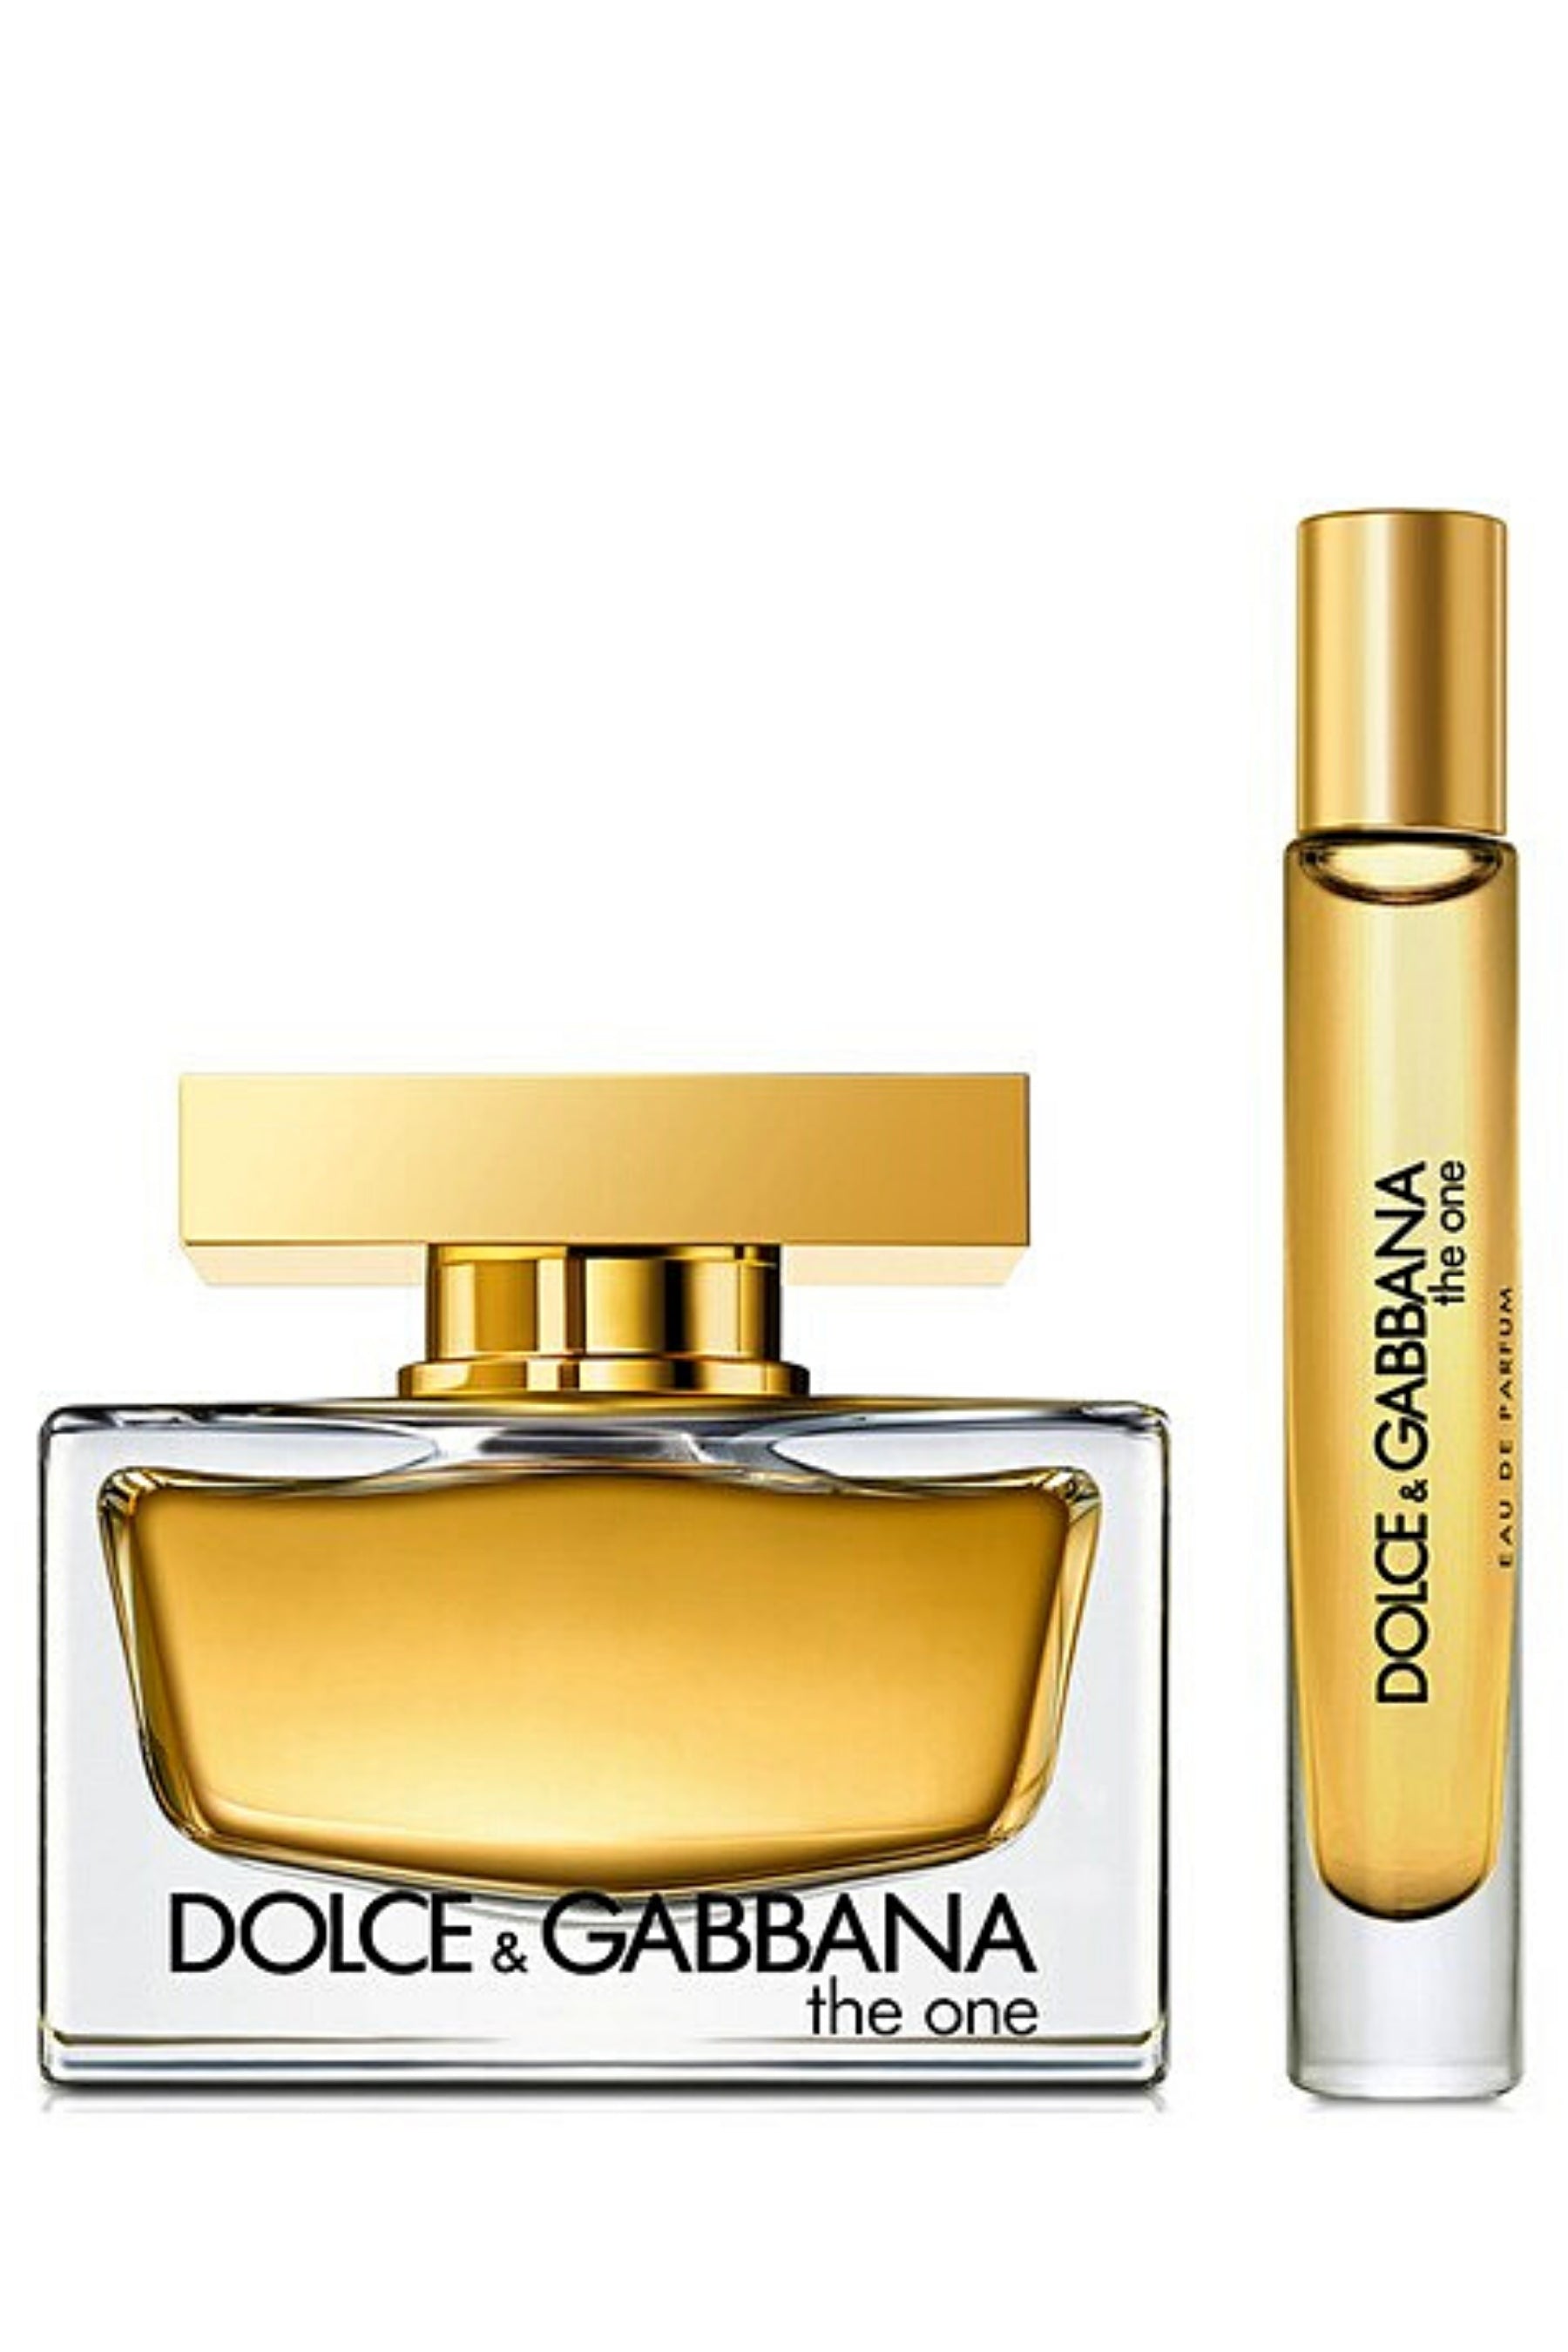 Дольче габбана the one купить. Dolce Gabbana the one 10 мл. Евро Dolce & Gabbana the one,EDP., 75 ml. Дольче Габбана the one Gold 10 мл. The one women Dolce&Gabbana 75 мл.